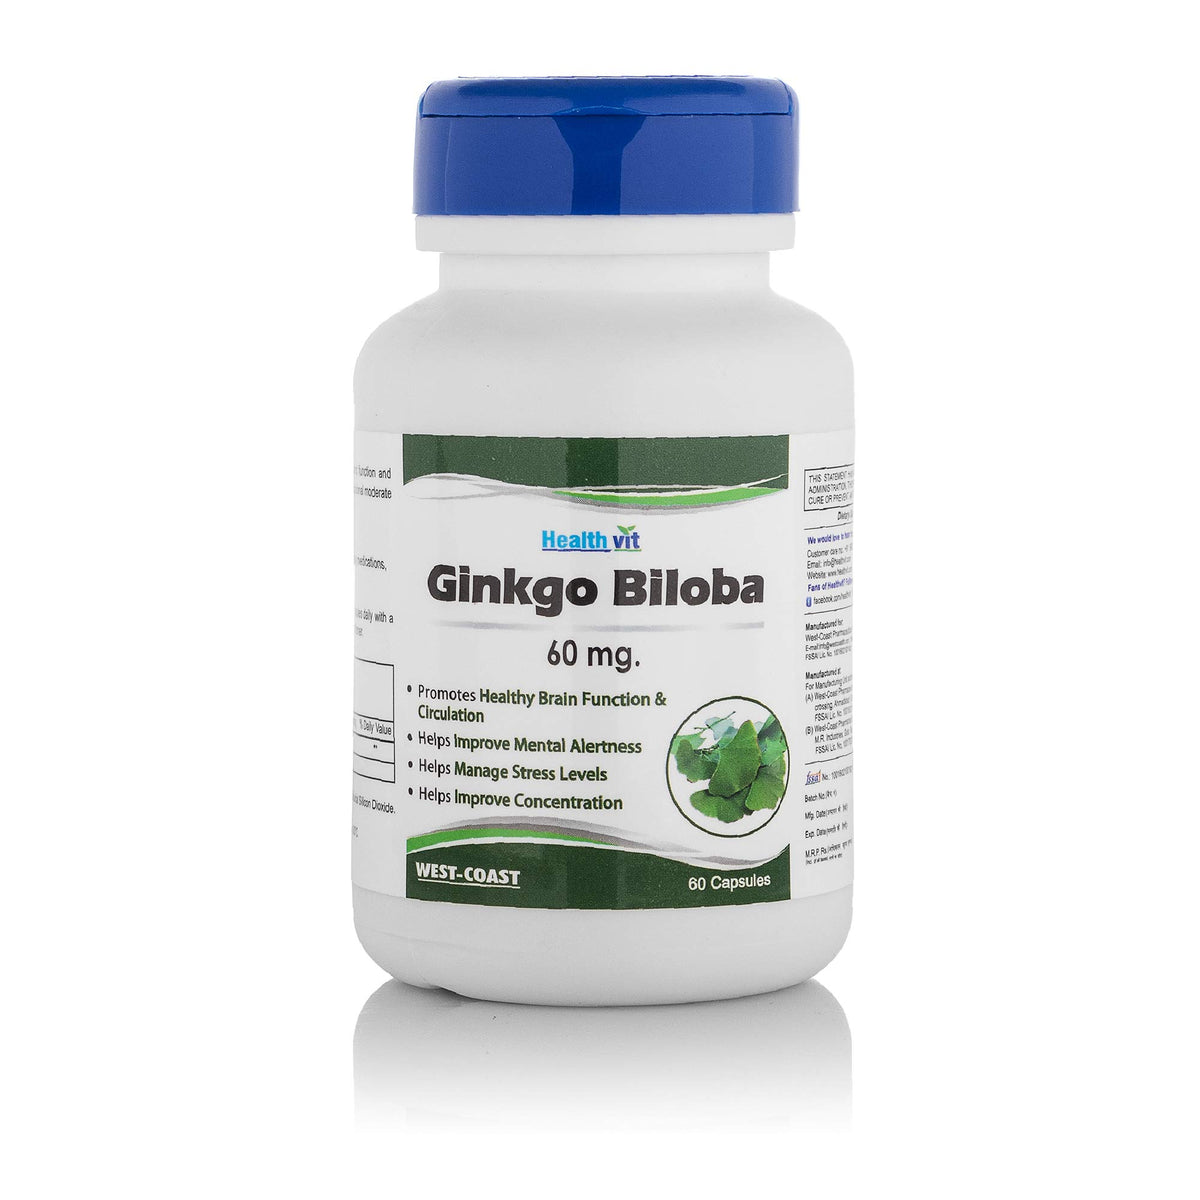 Healthvit Ginkgo Biloba 60mg For Healthy Brain Function | Manage Stress Levels | Improve Mental Alertness | Improve Concentration - 60 Capsules